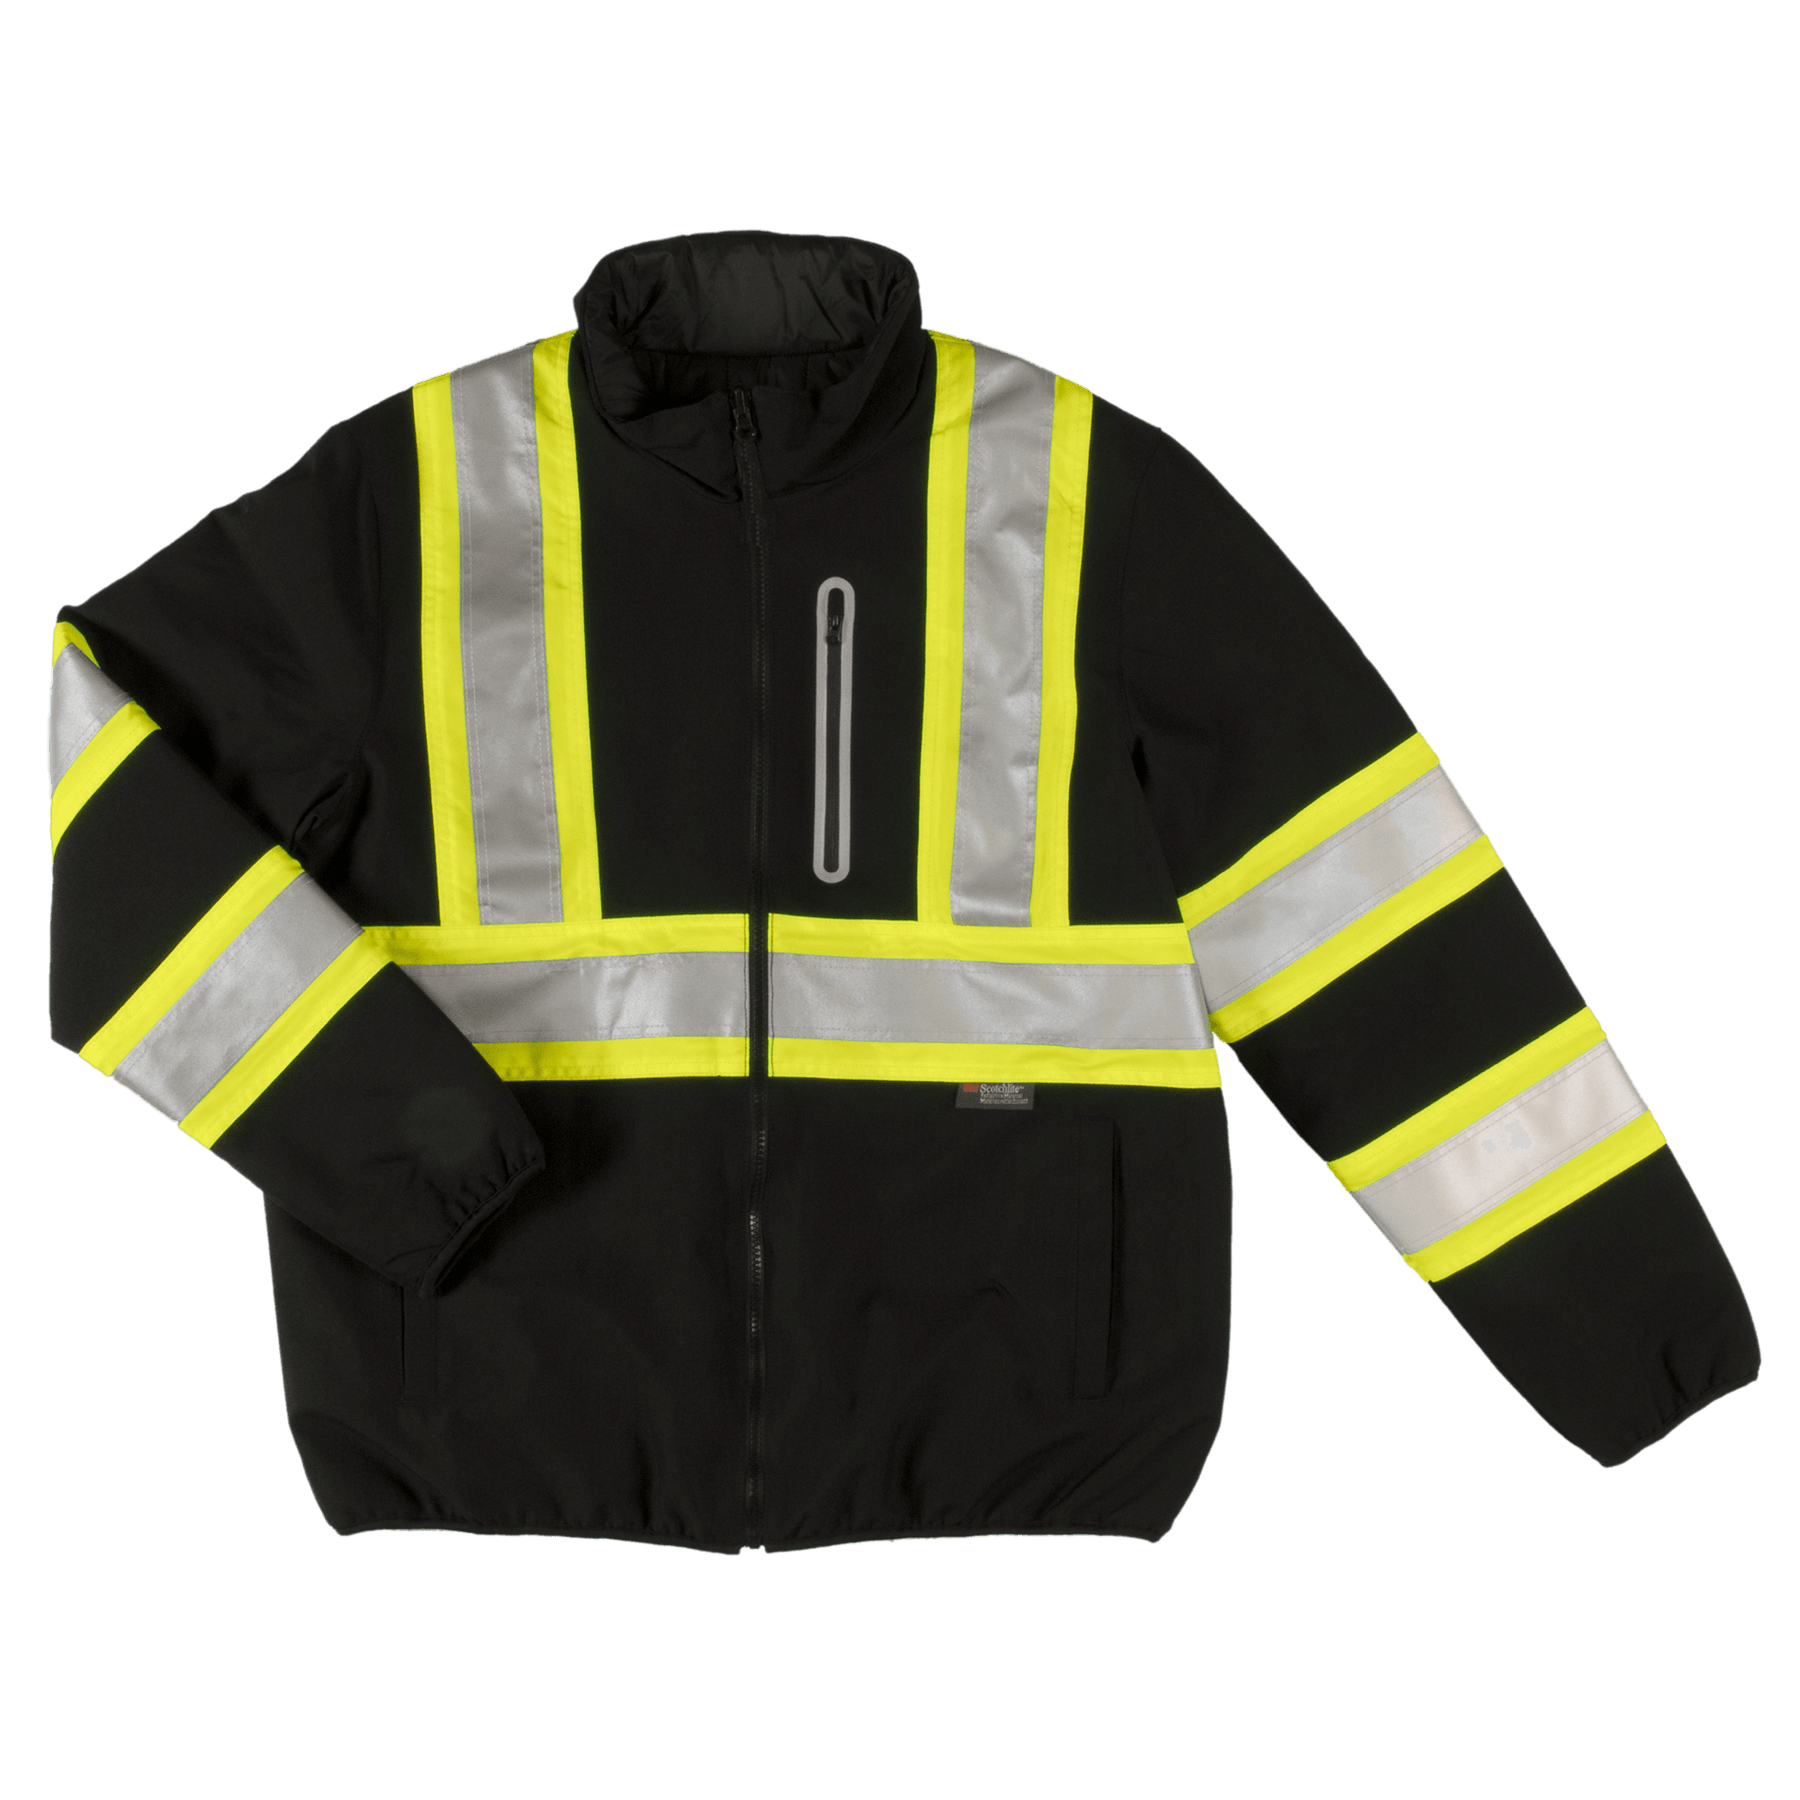 Revsble Safety Jacket Flo Or